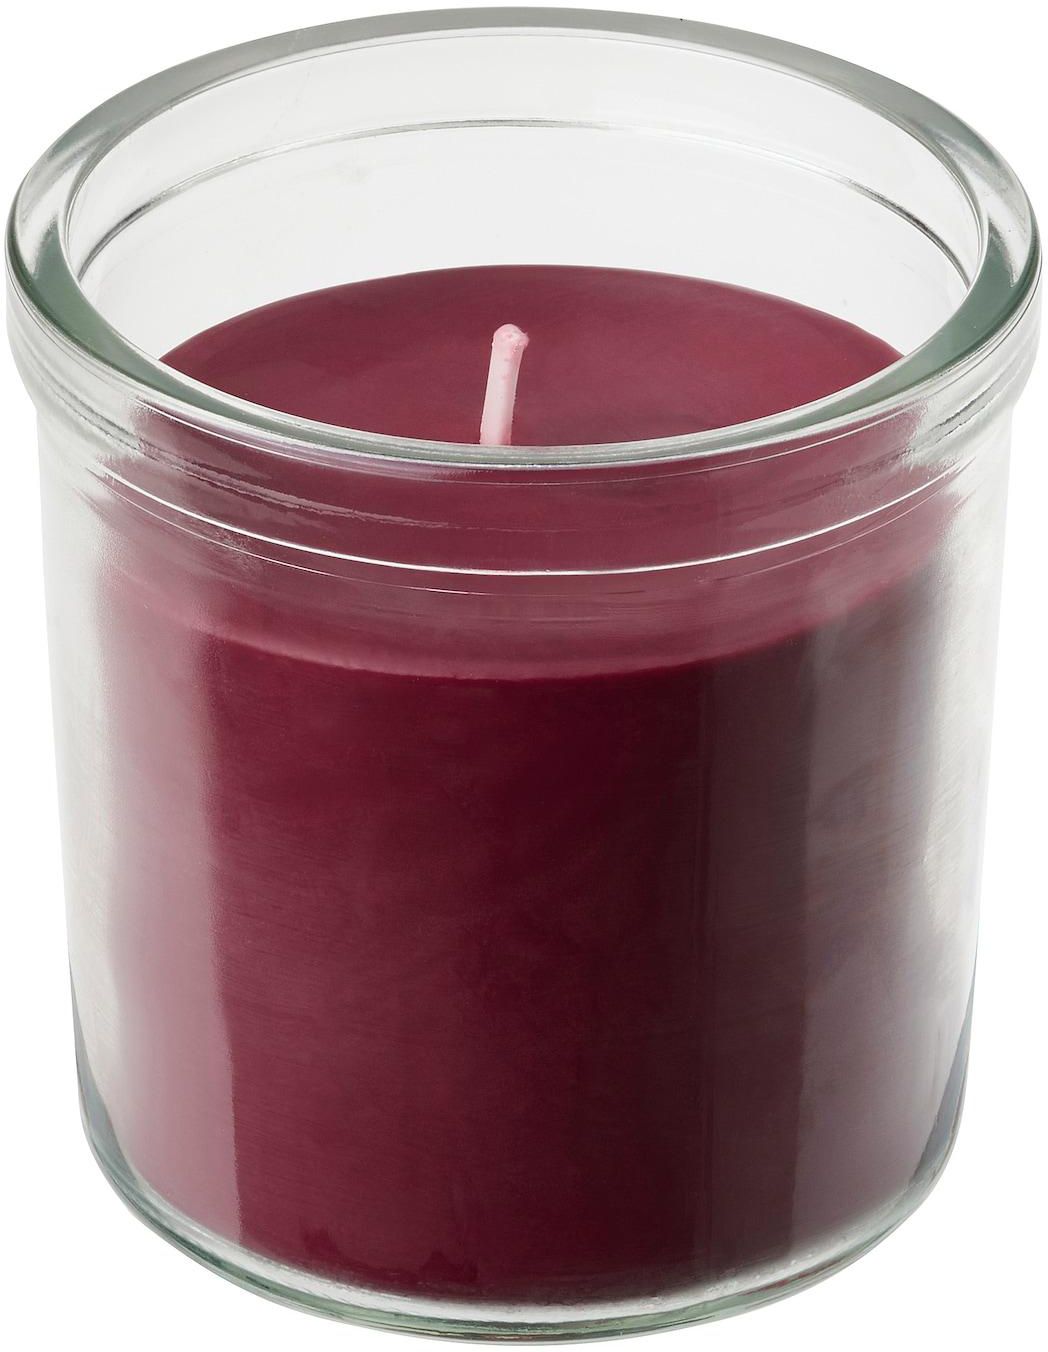 STÖRTSKÖN Scented candle in glass - Berries/red 40 hr